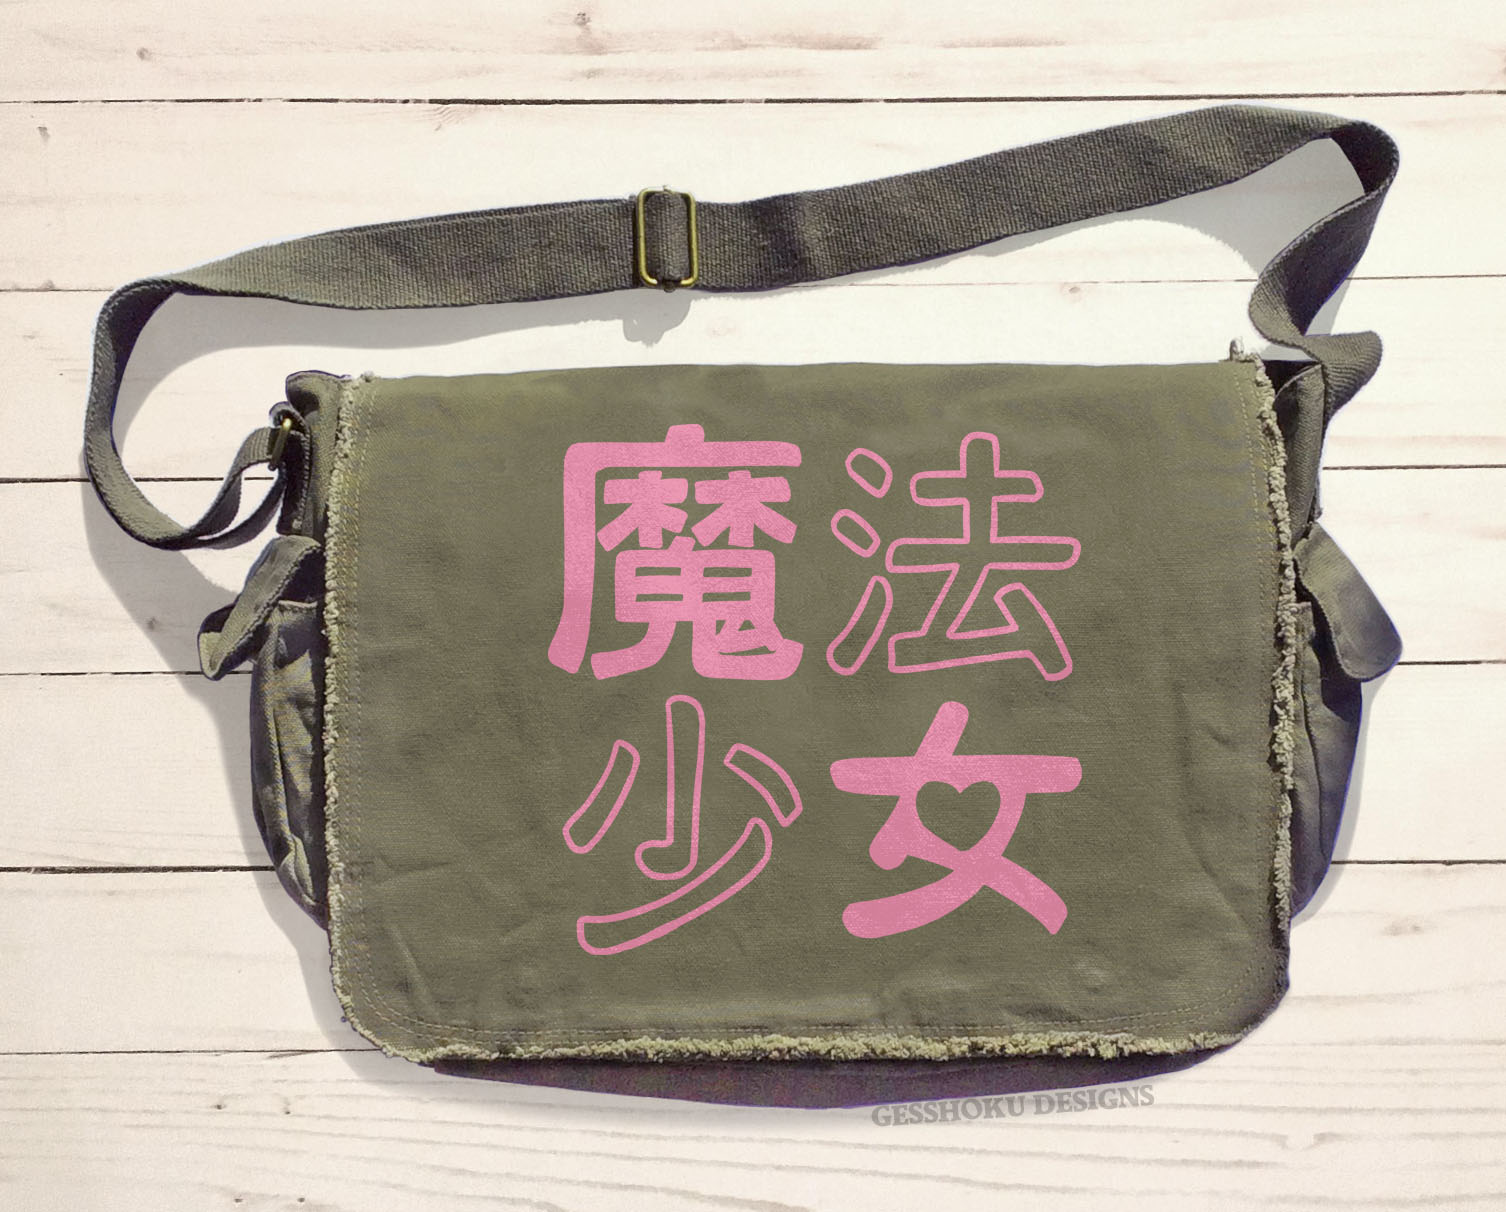 Mahou Shoujo Messenger Bag - Khaki Green